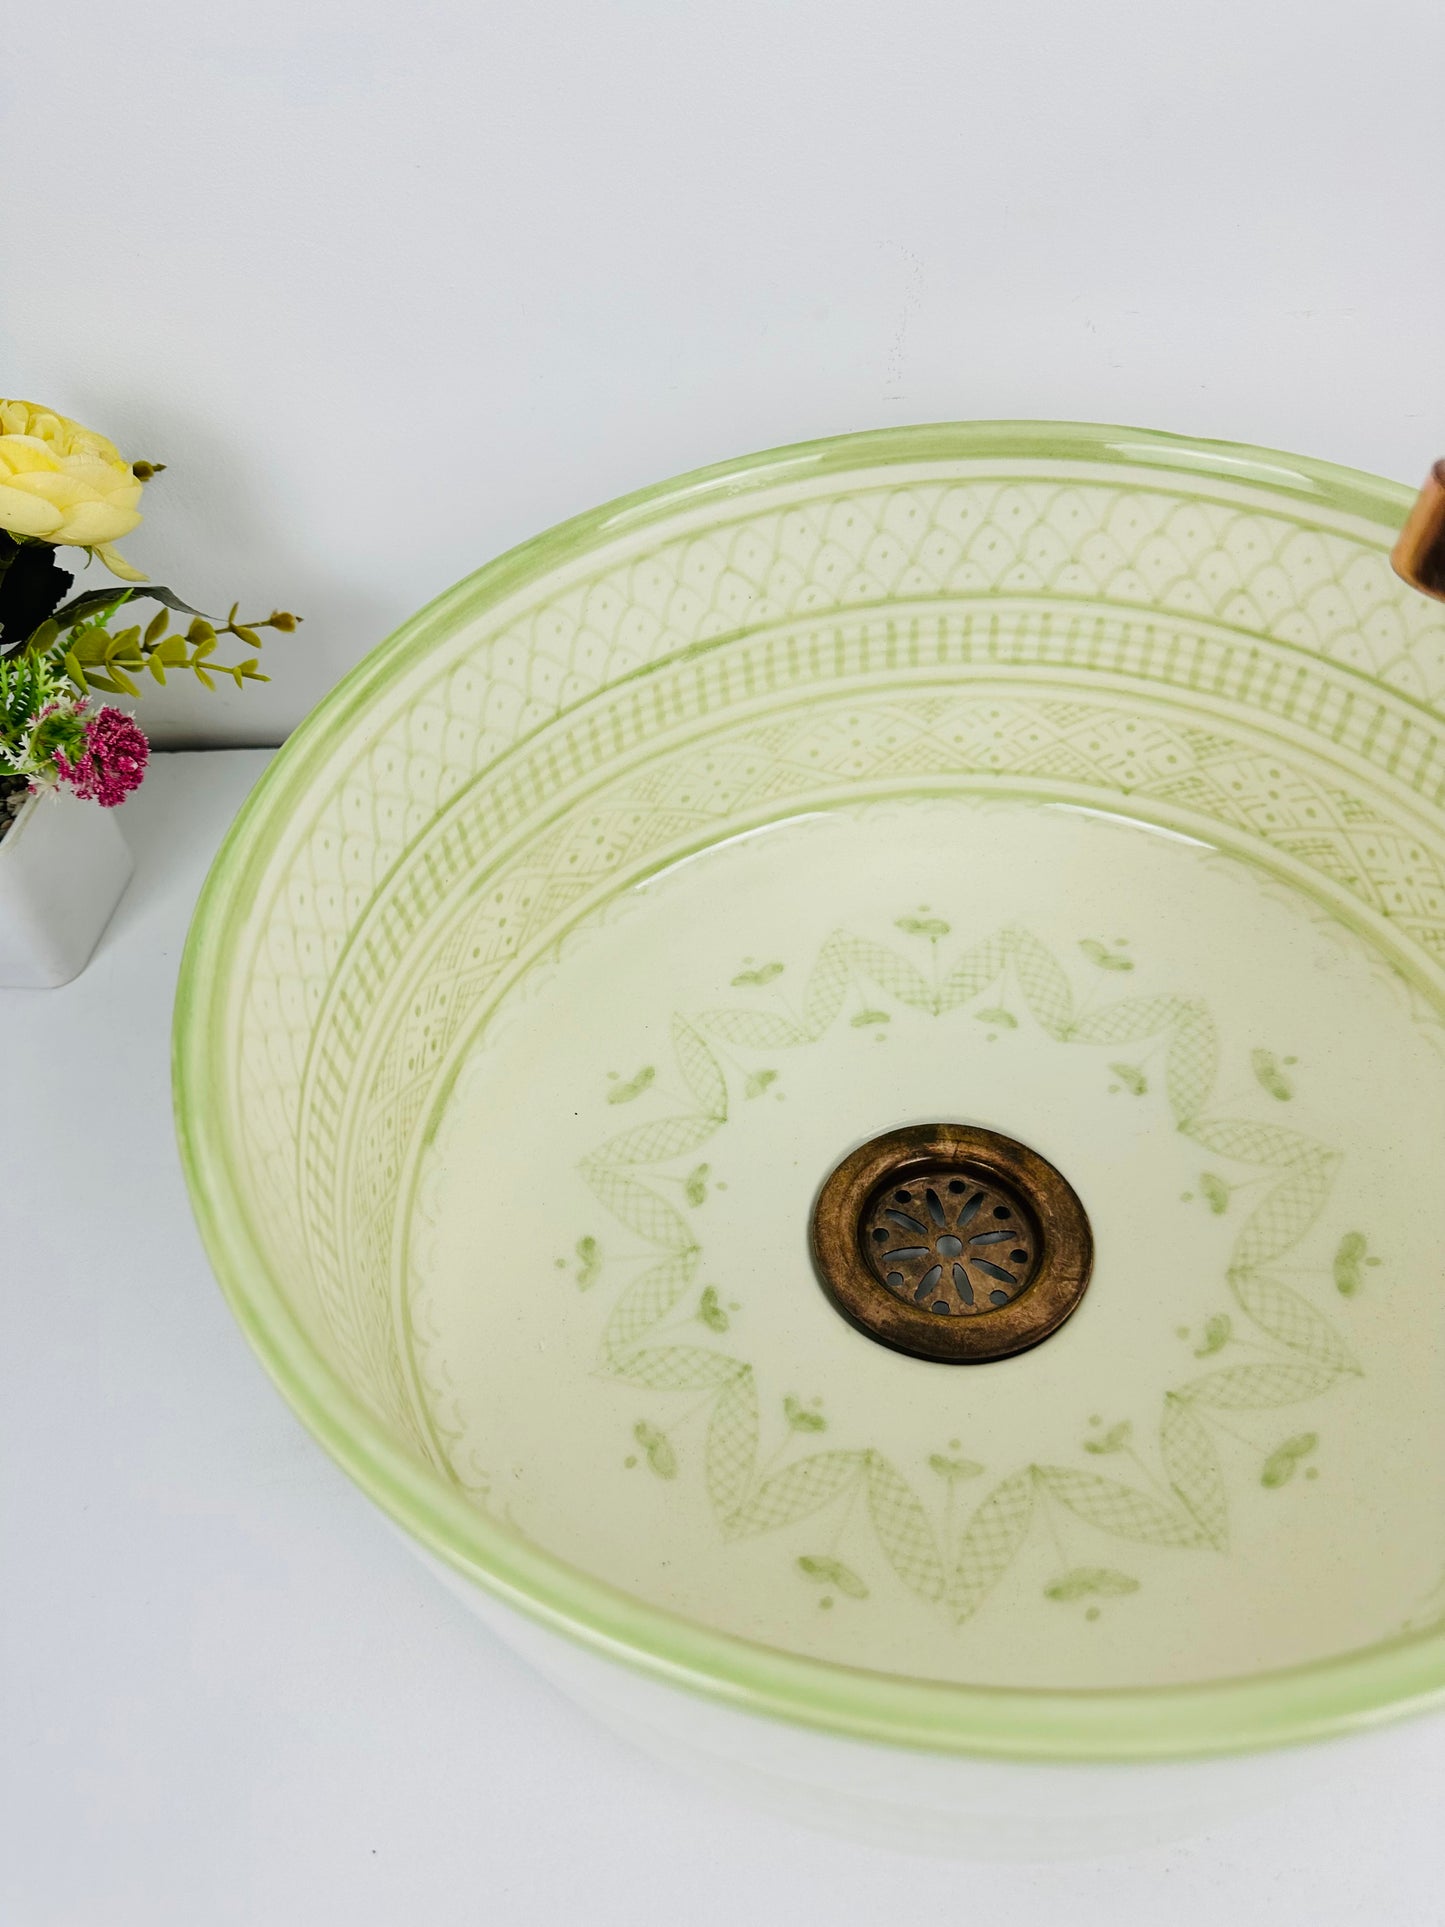 Pistachio Dream: Handcrafted Ceramic Sink in Pistachio Green Hue